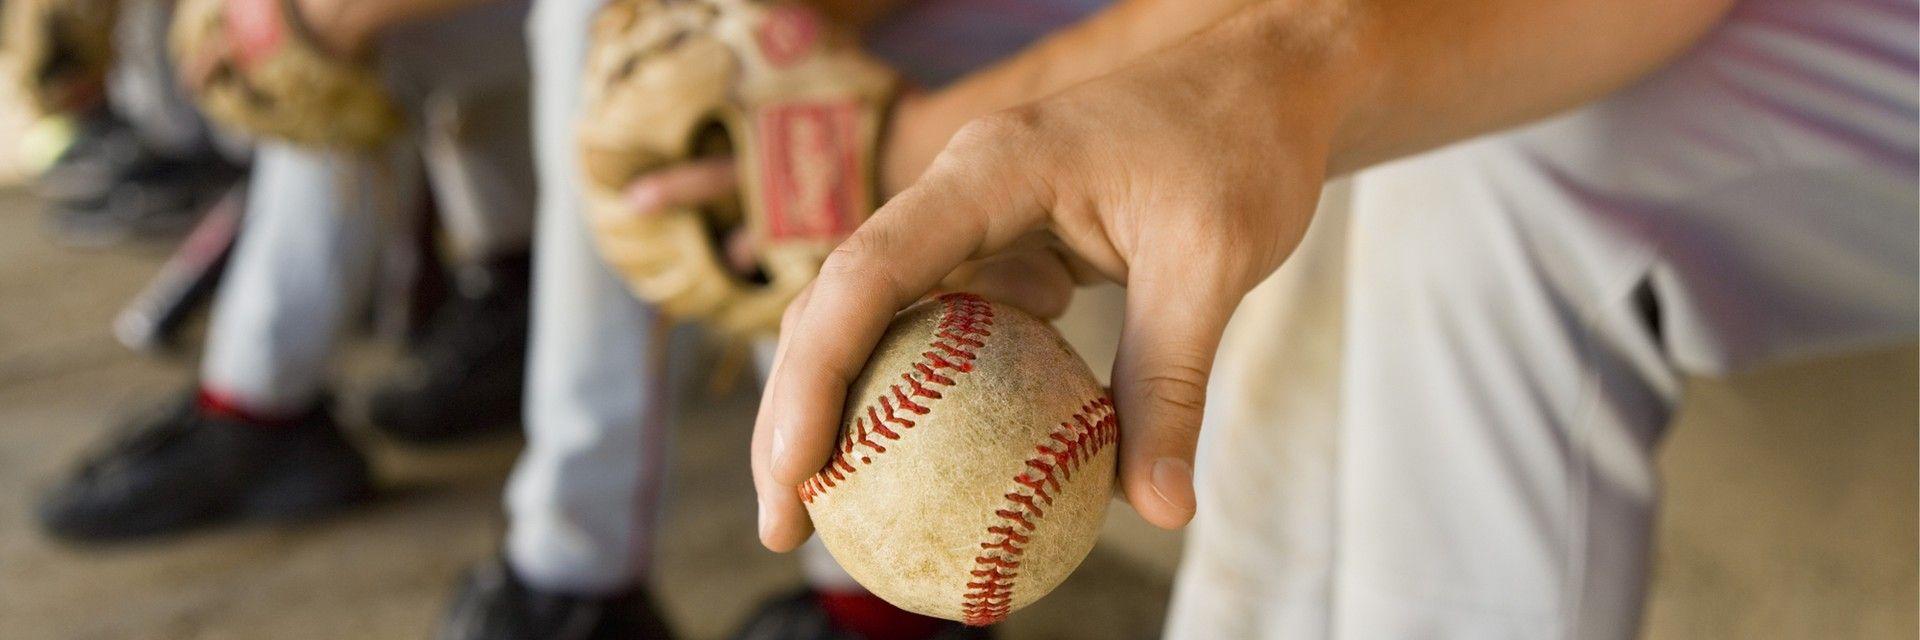 Common-Baseball-Injuries